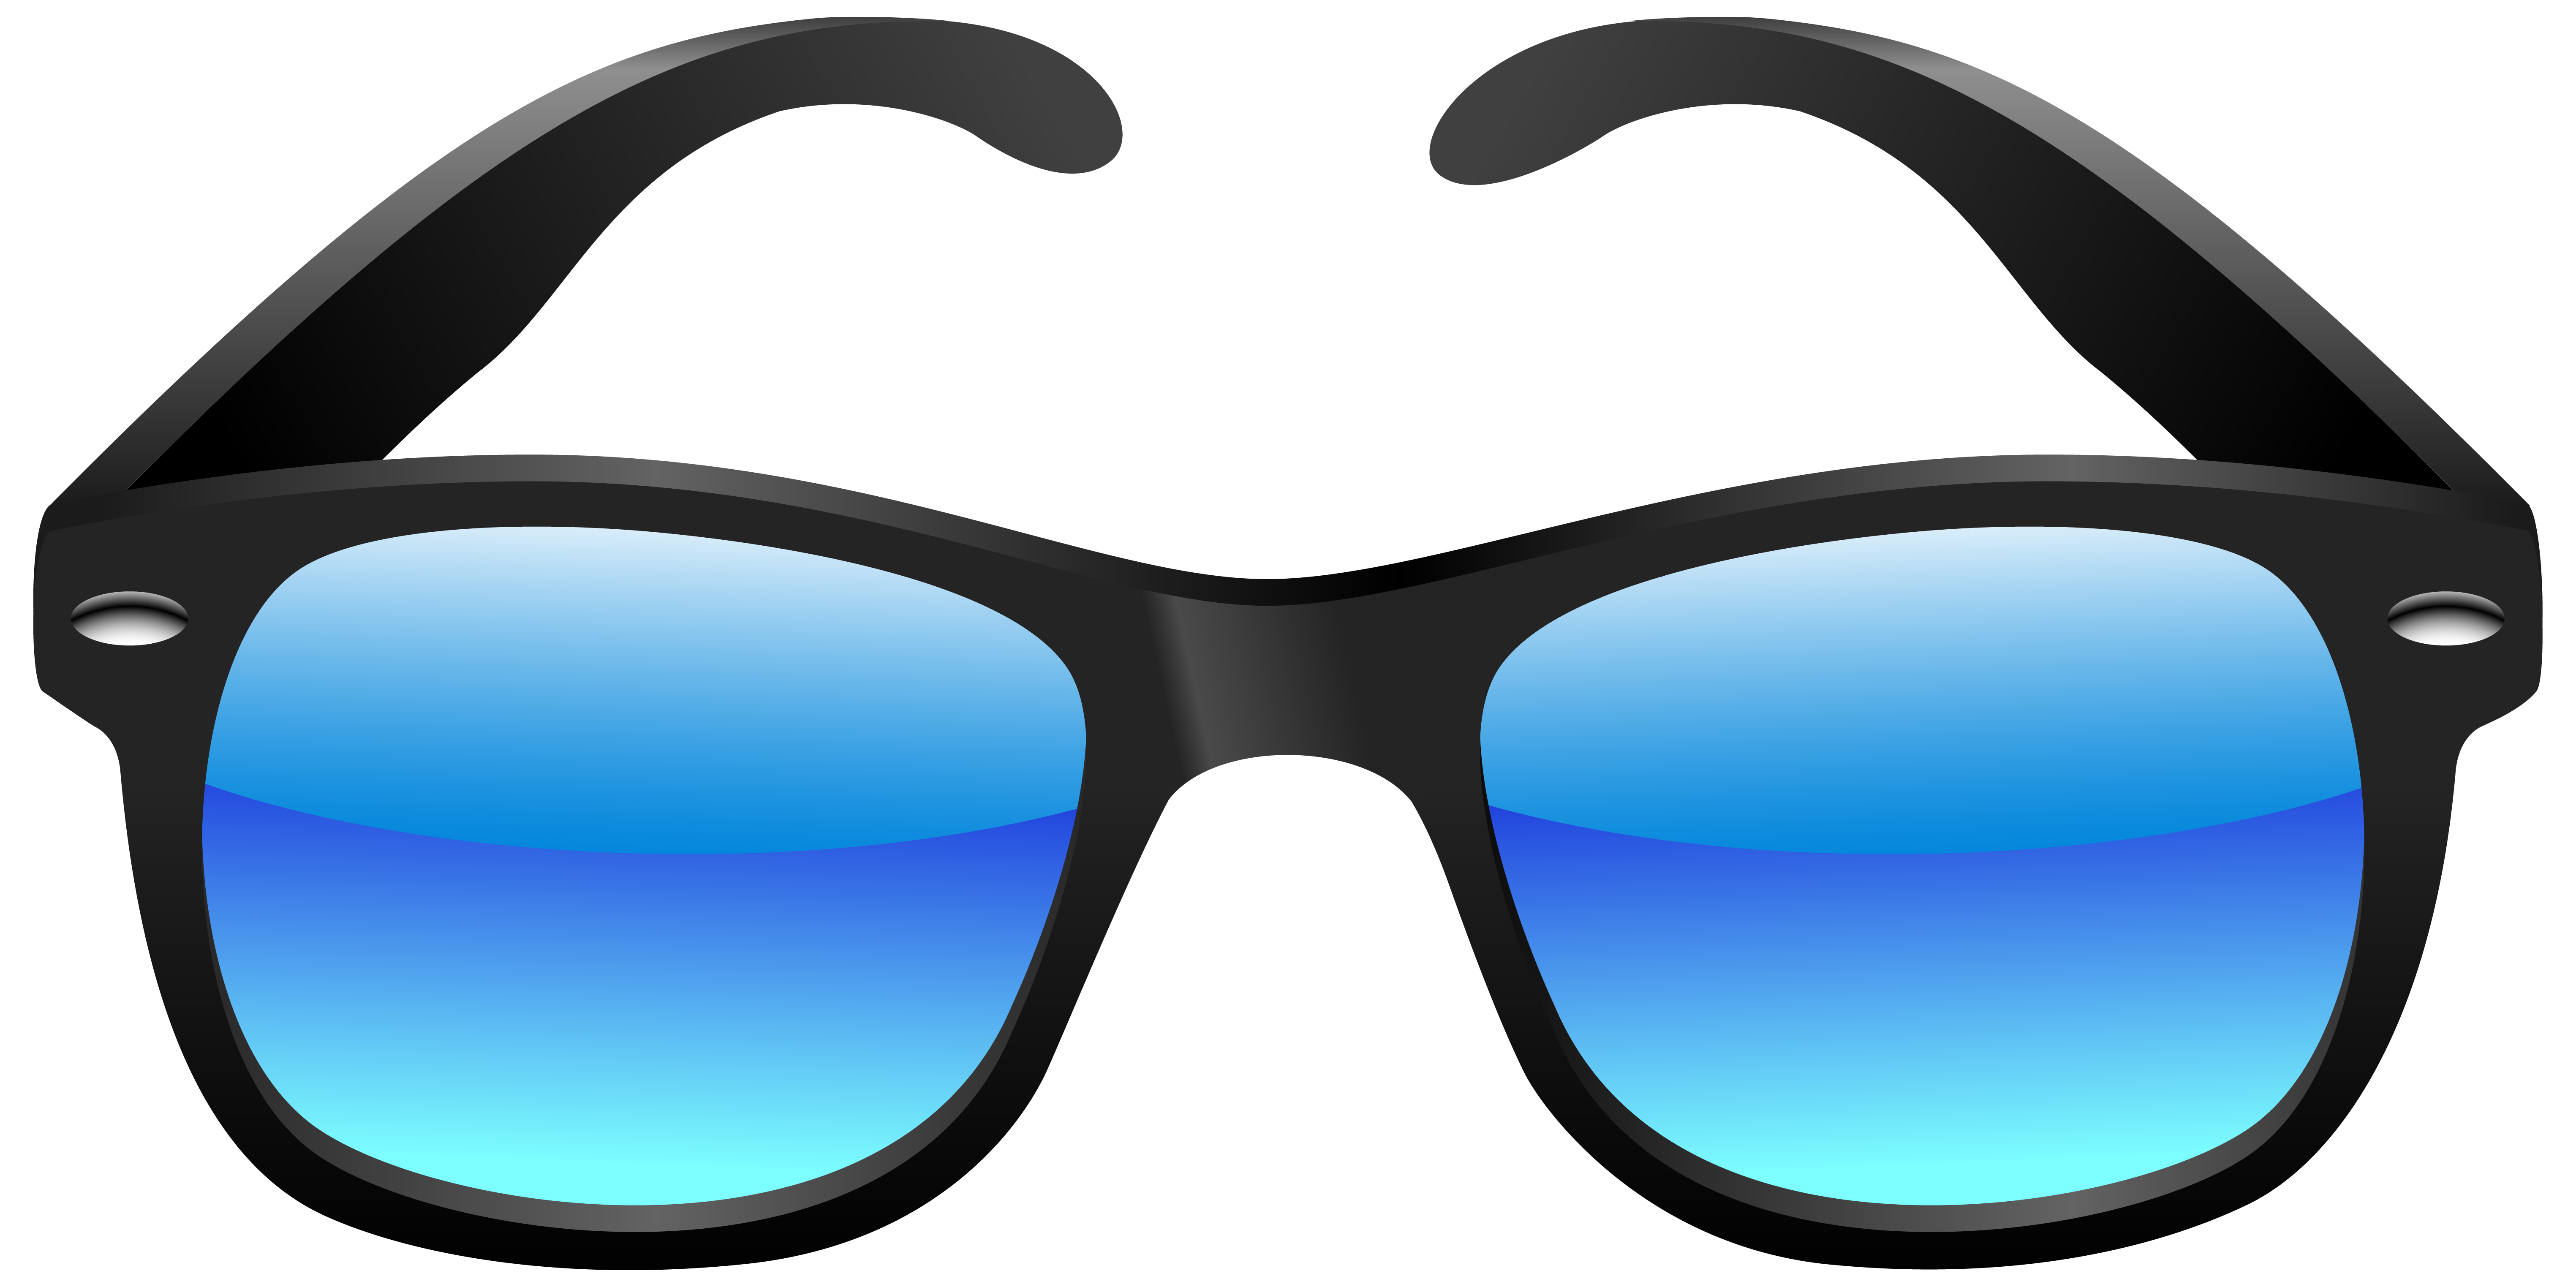 Clip art of sunglasses clipart clipartwiz - Clipartix